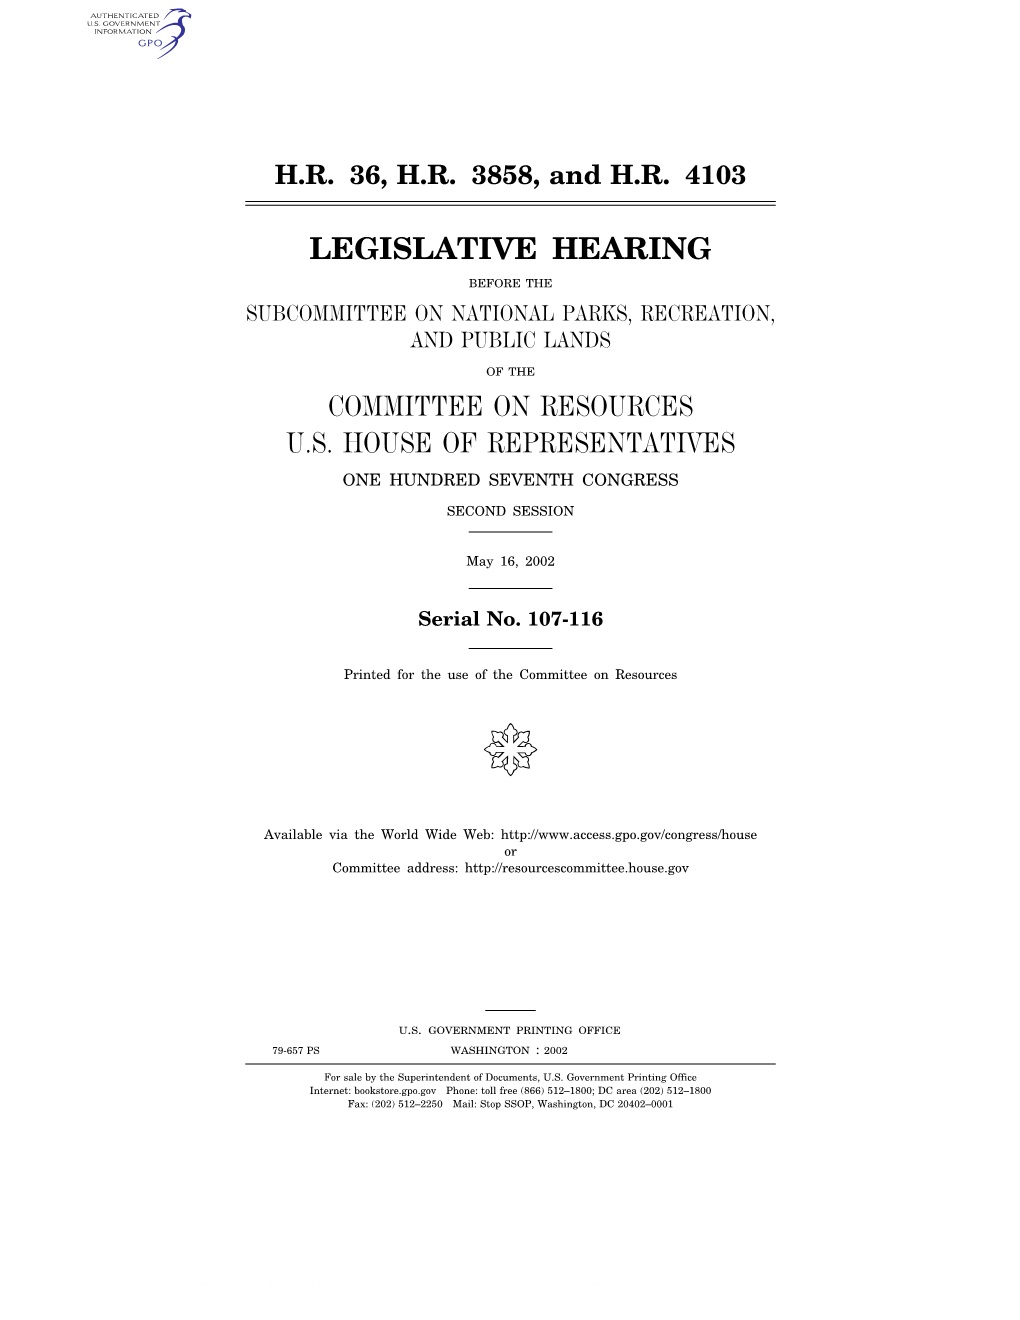 Legislative Hearing Committee on Resources U.S. House of Representatives